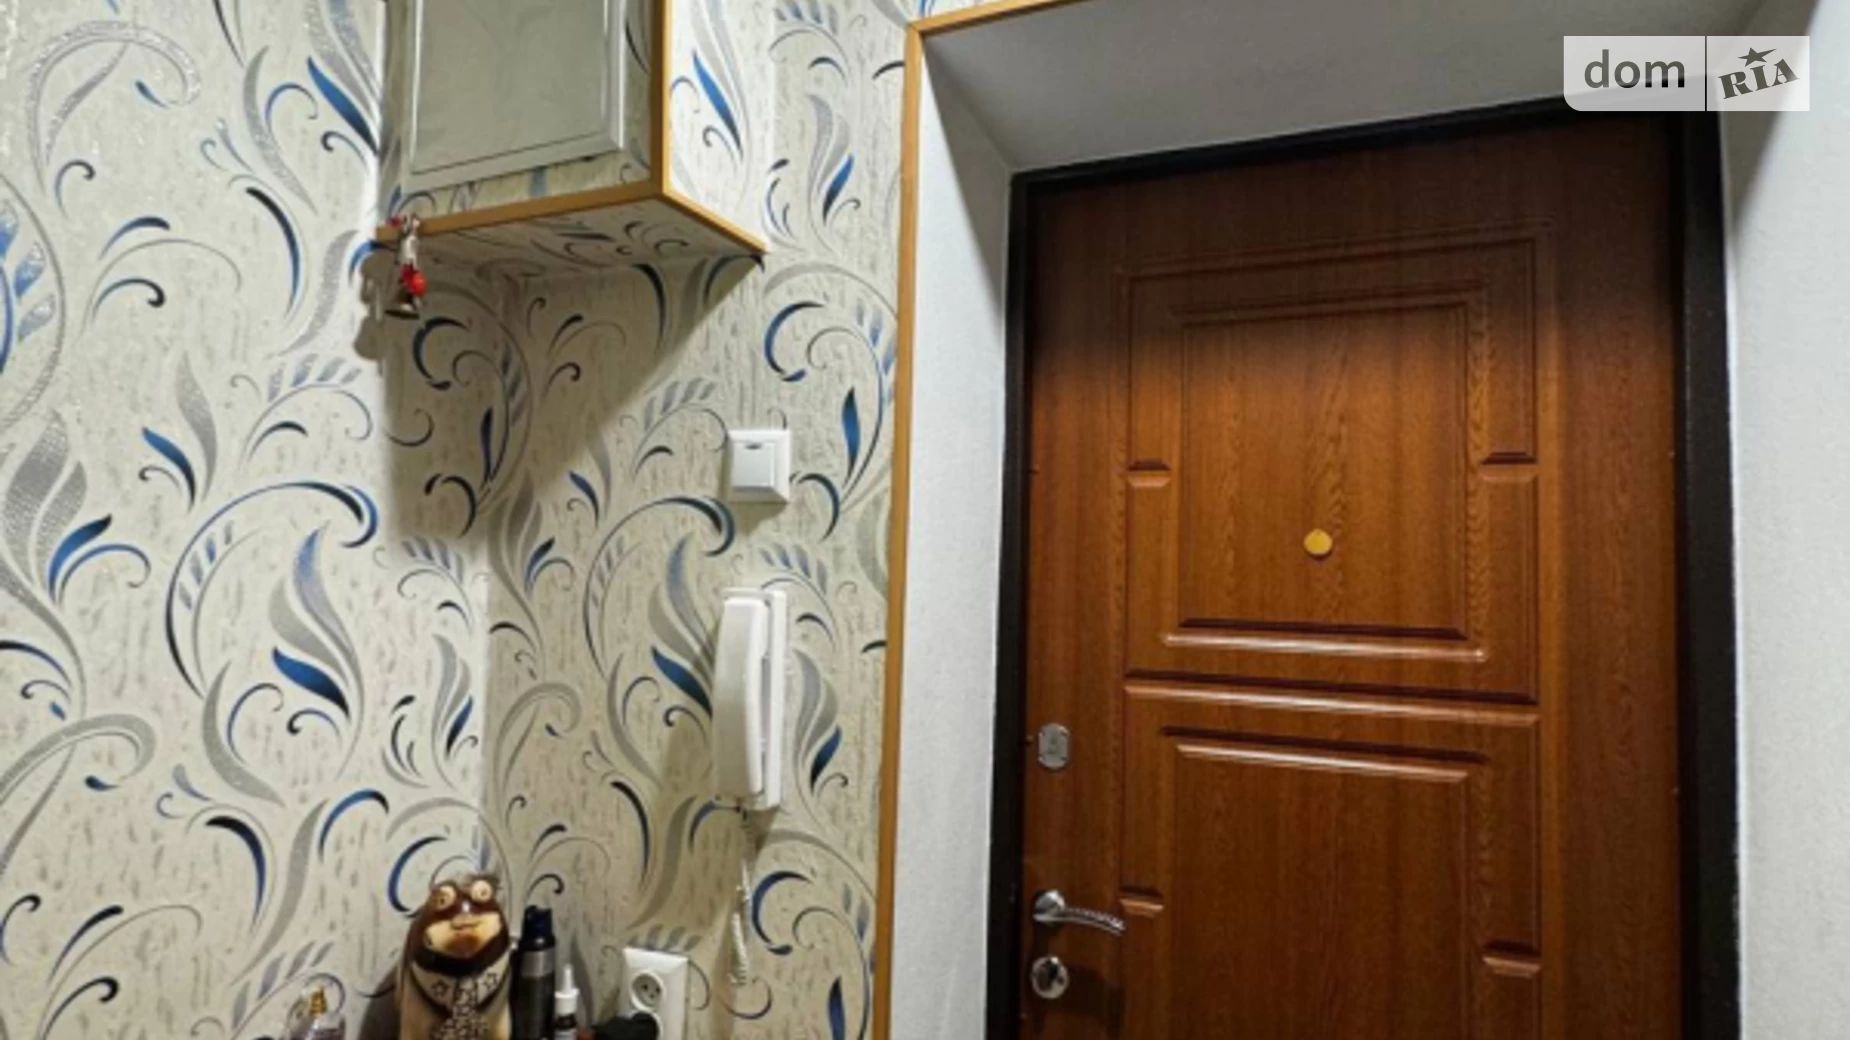 Продается 1-комнатная квартира 31 кв. м в Чернигове - фото 2